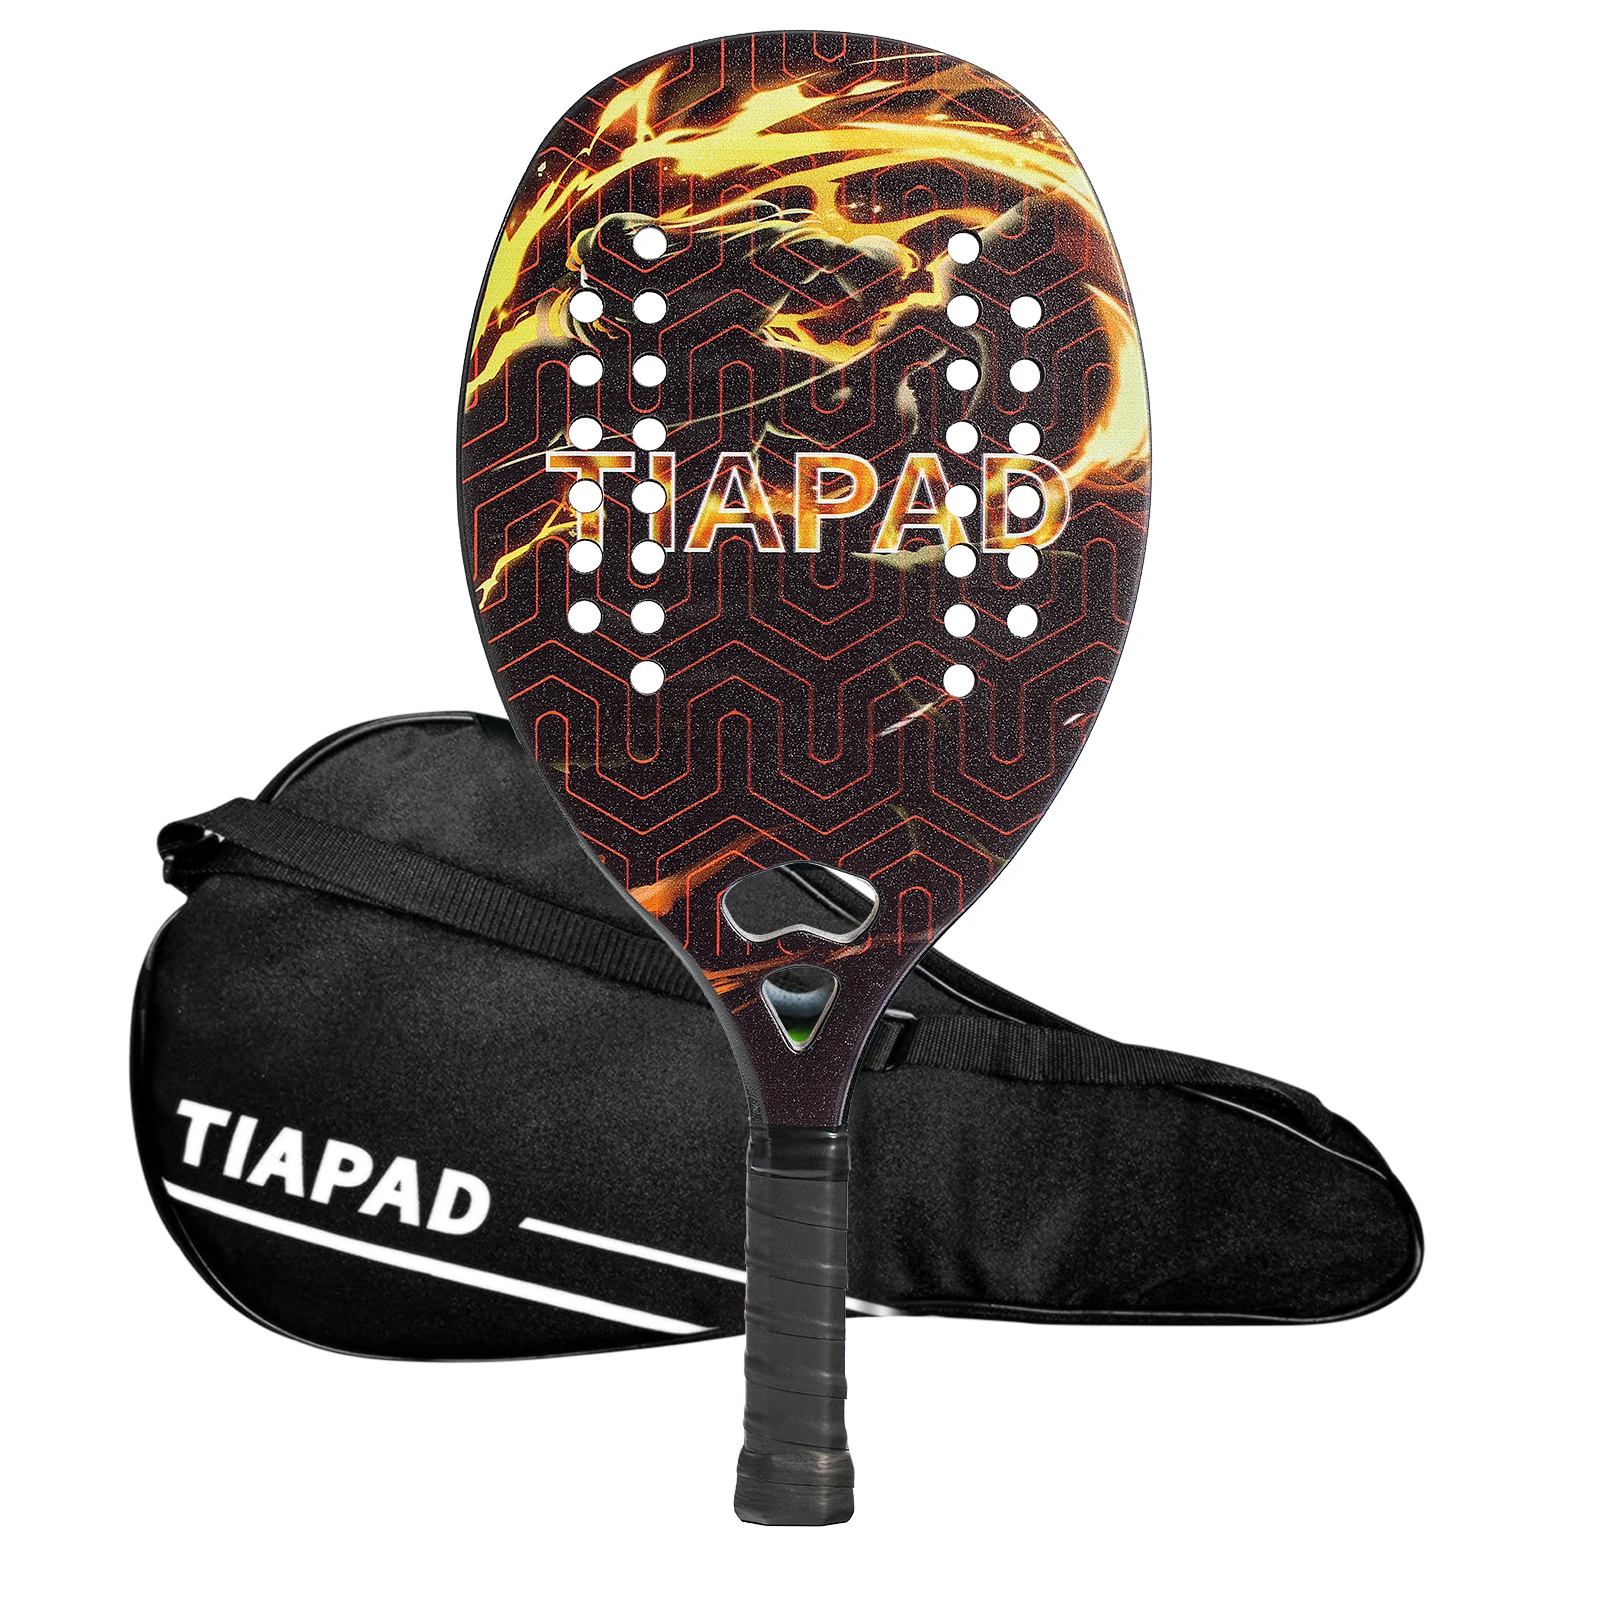 TIAPAD NEW Carbon Fiber Raquetes De Tênis De Praia Flame of Passion EVA Beach Tennis Paddle With Sweat Buffer Grip